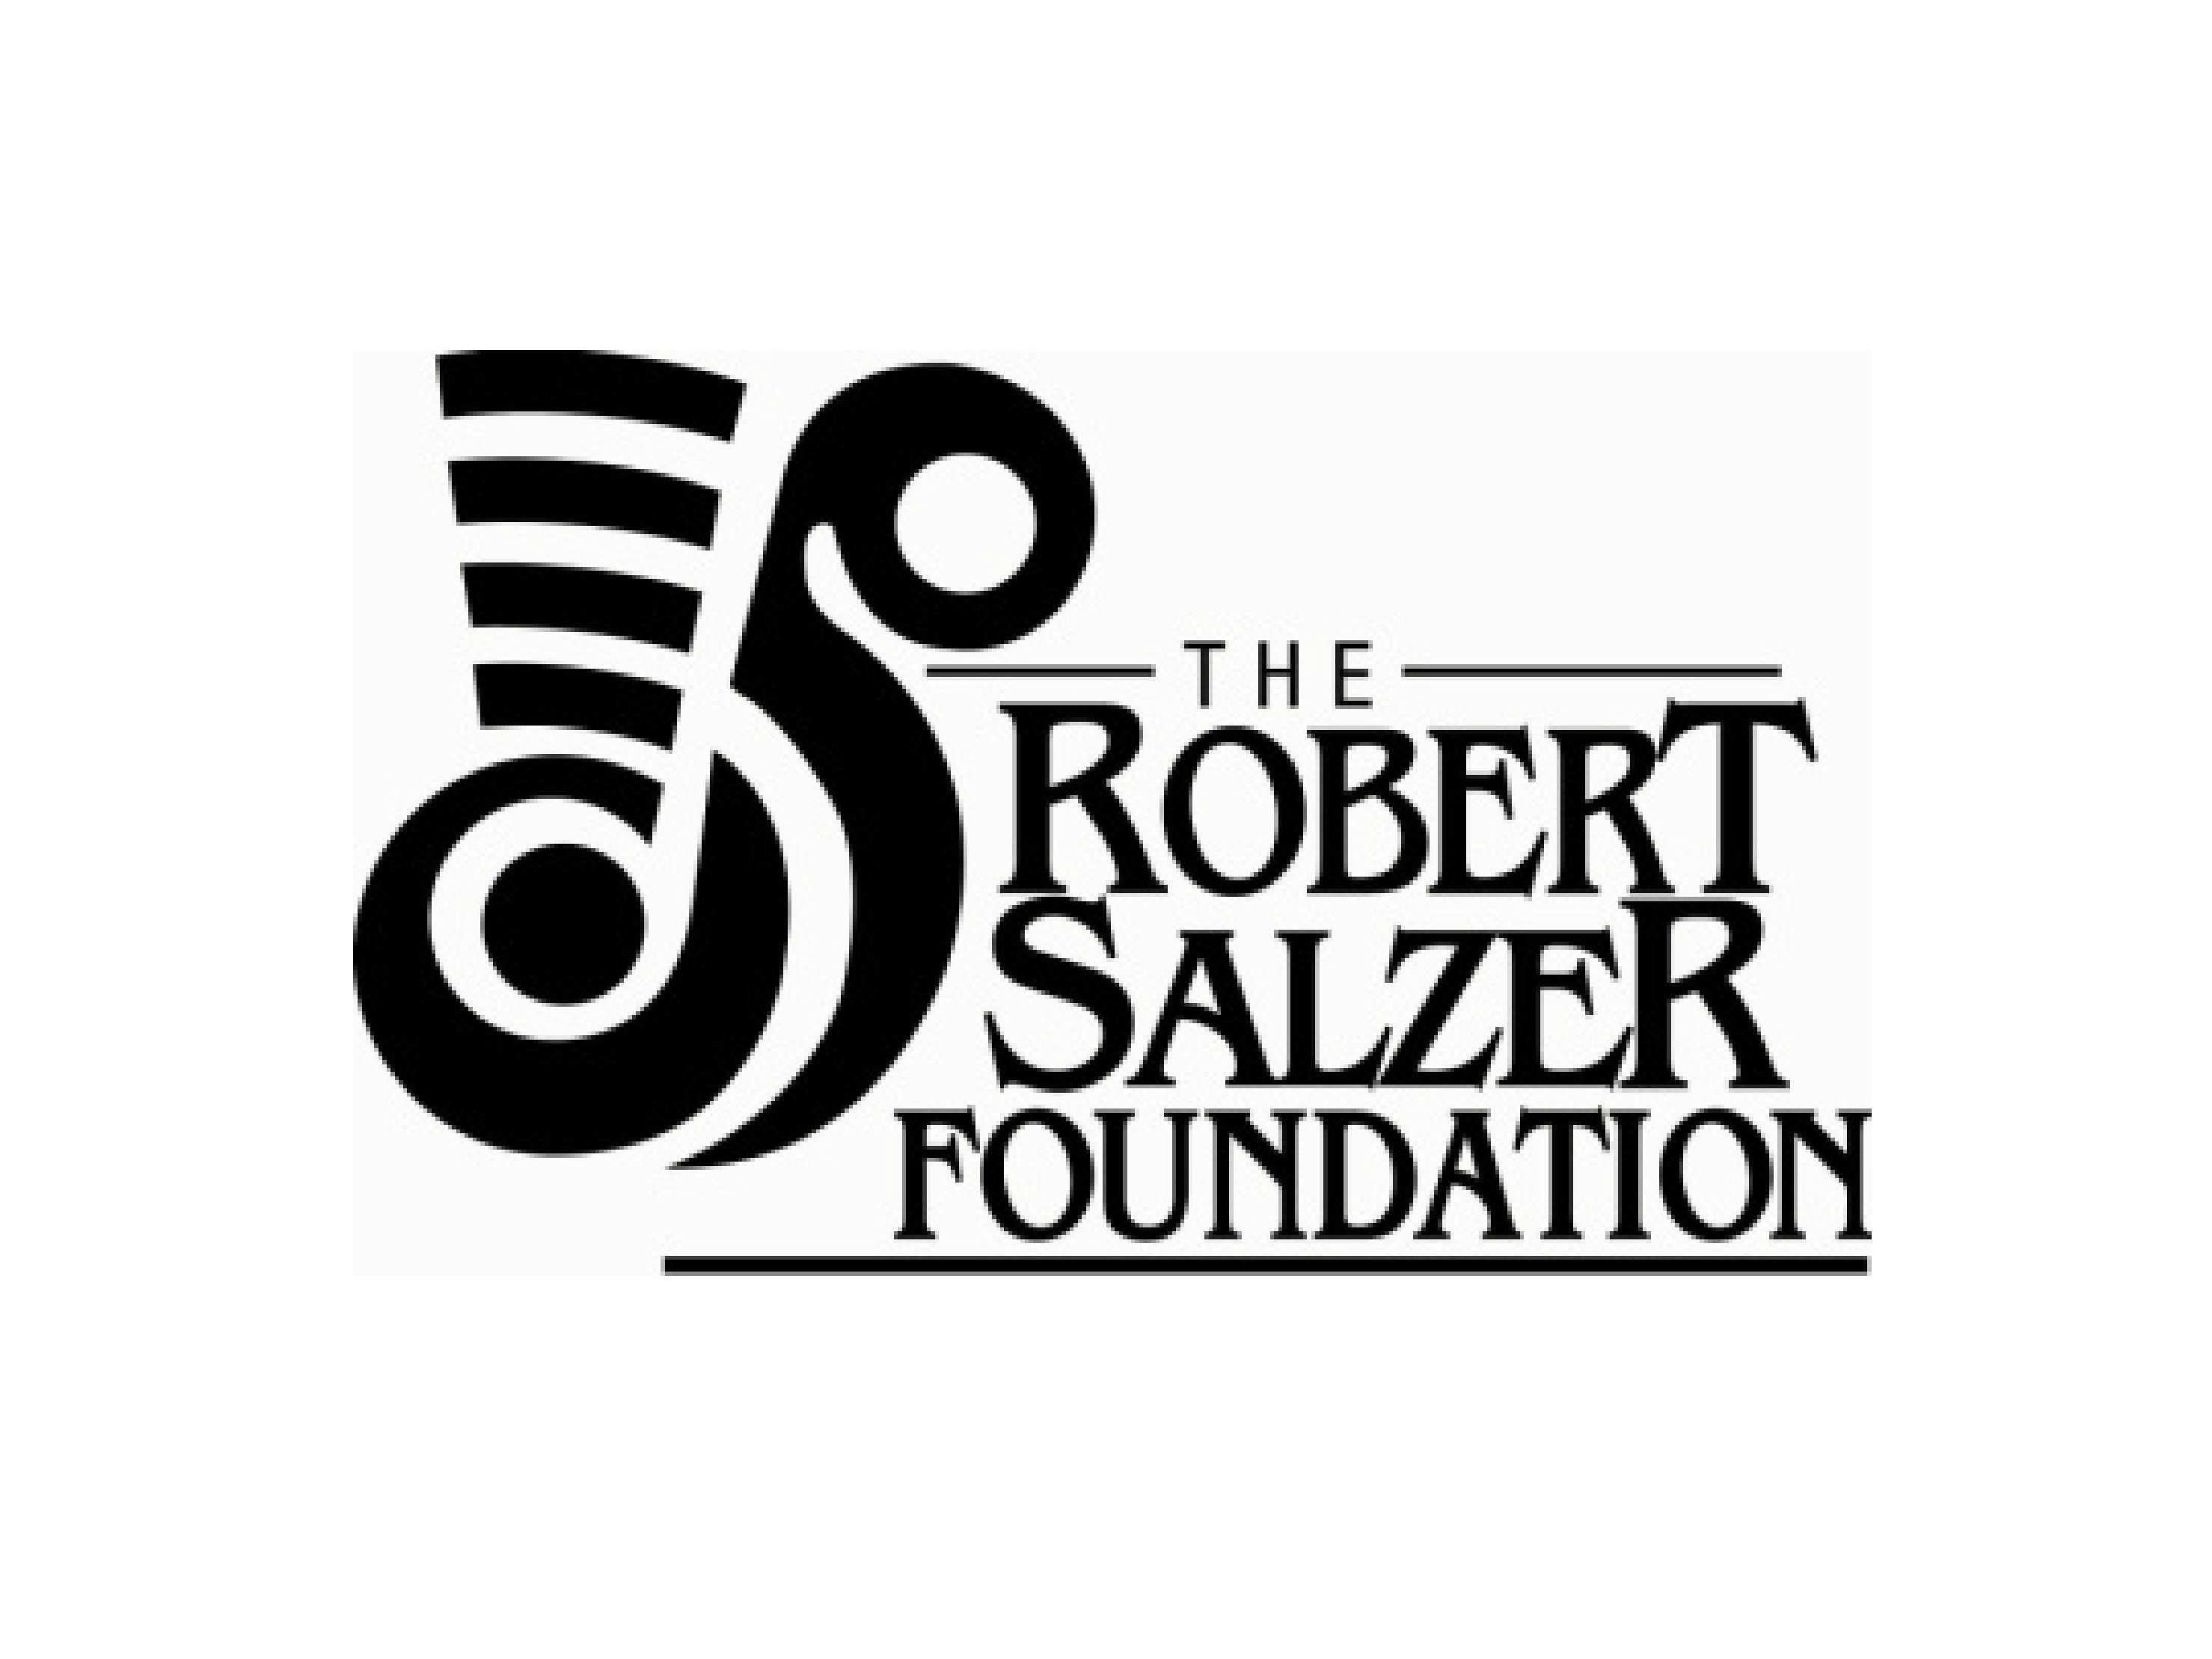 Robert Salzer Foundation Logo